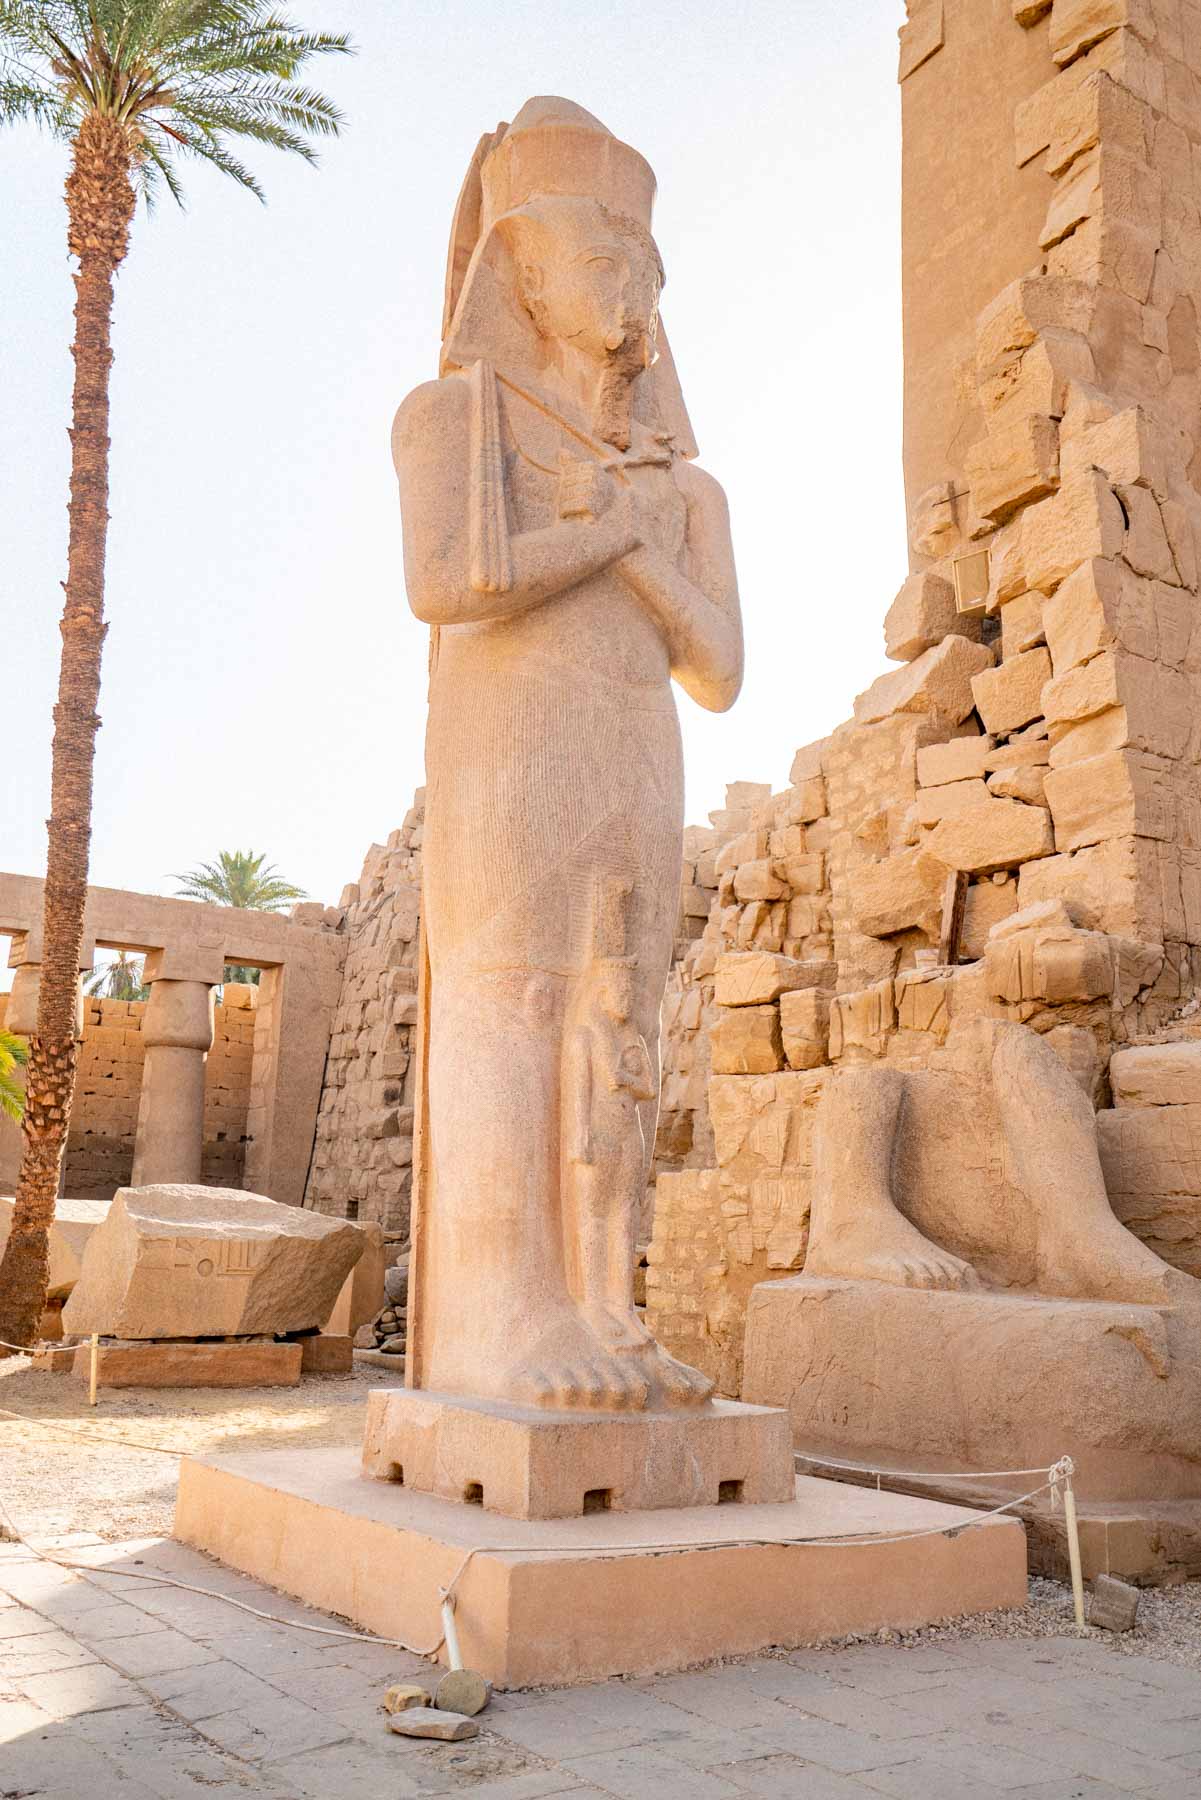 Visiting Egypt
Is Egypt safe?